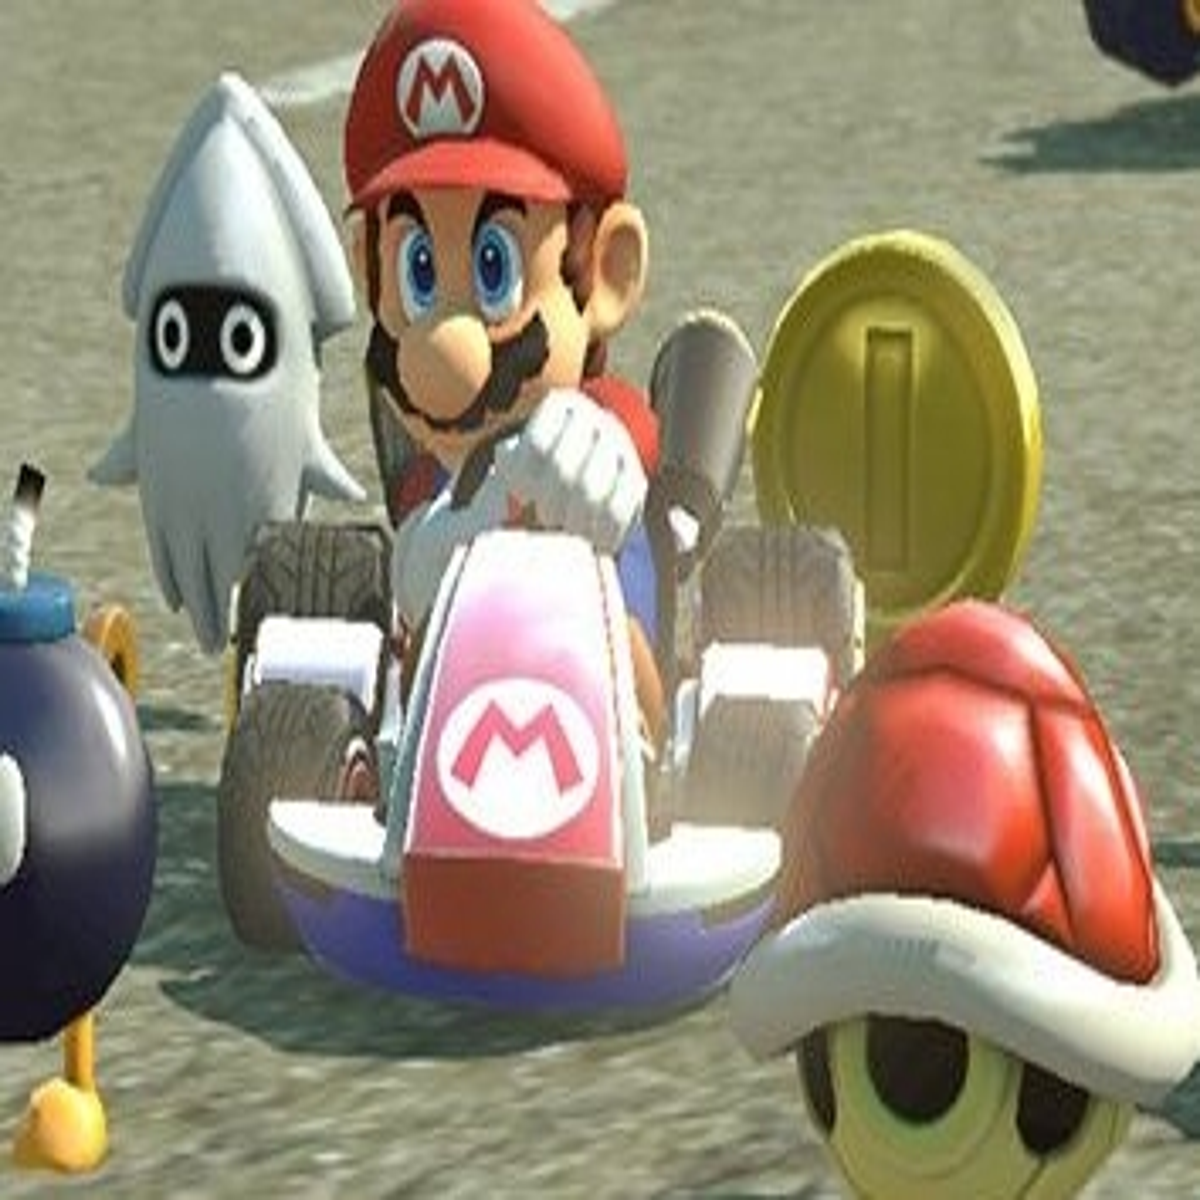 DLC - Mario Kart 8 Guide - IGN